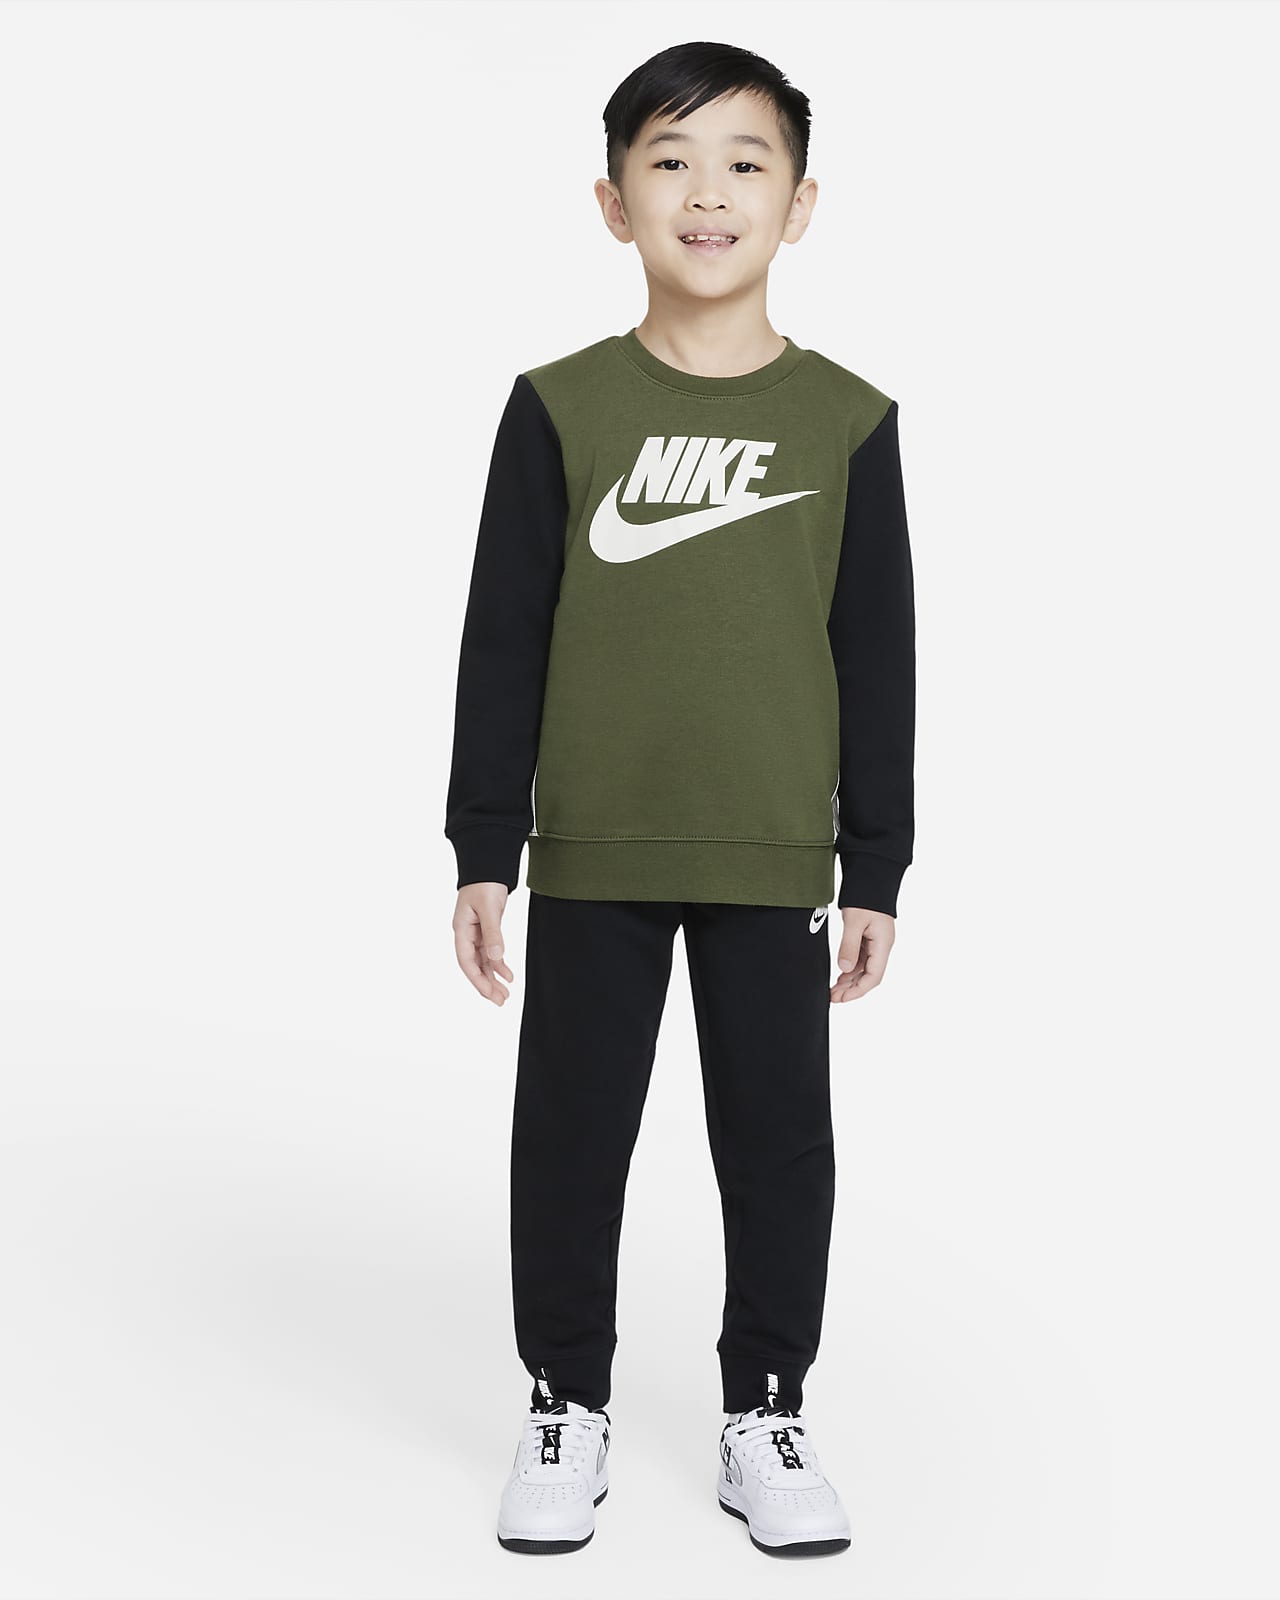 Nike Little Kids' Crew and Pants Set. Nike.com